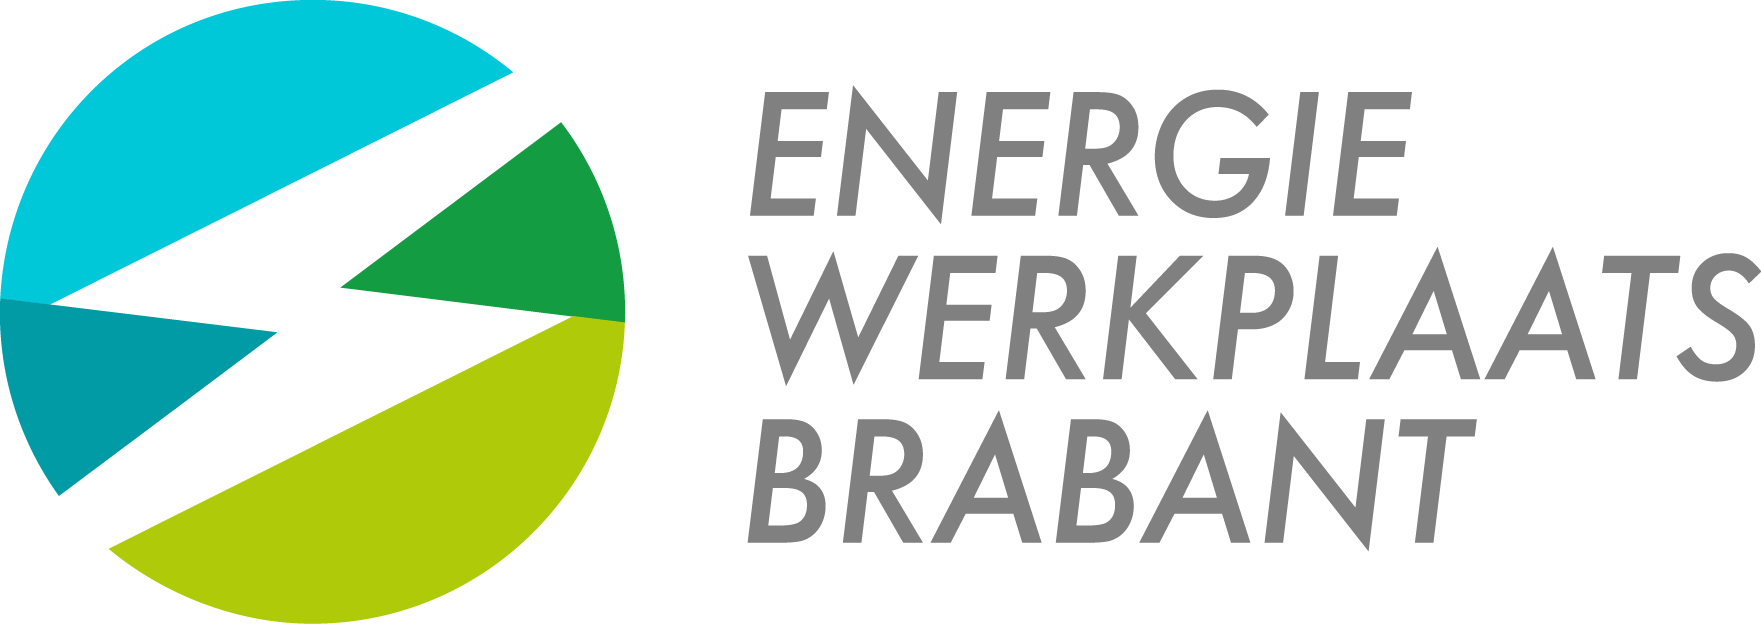 Energiewerkplaats Brabant logo